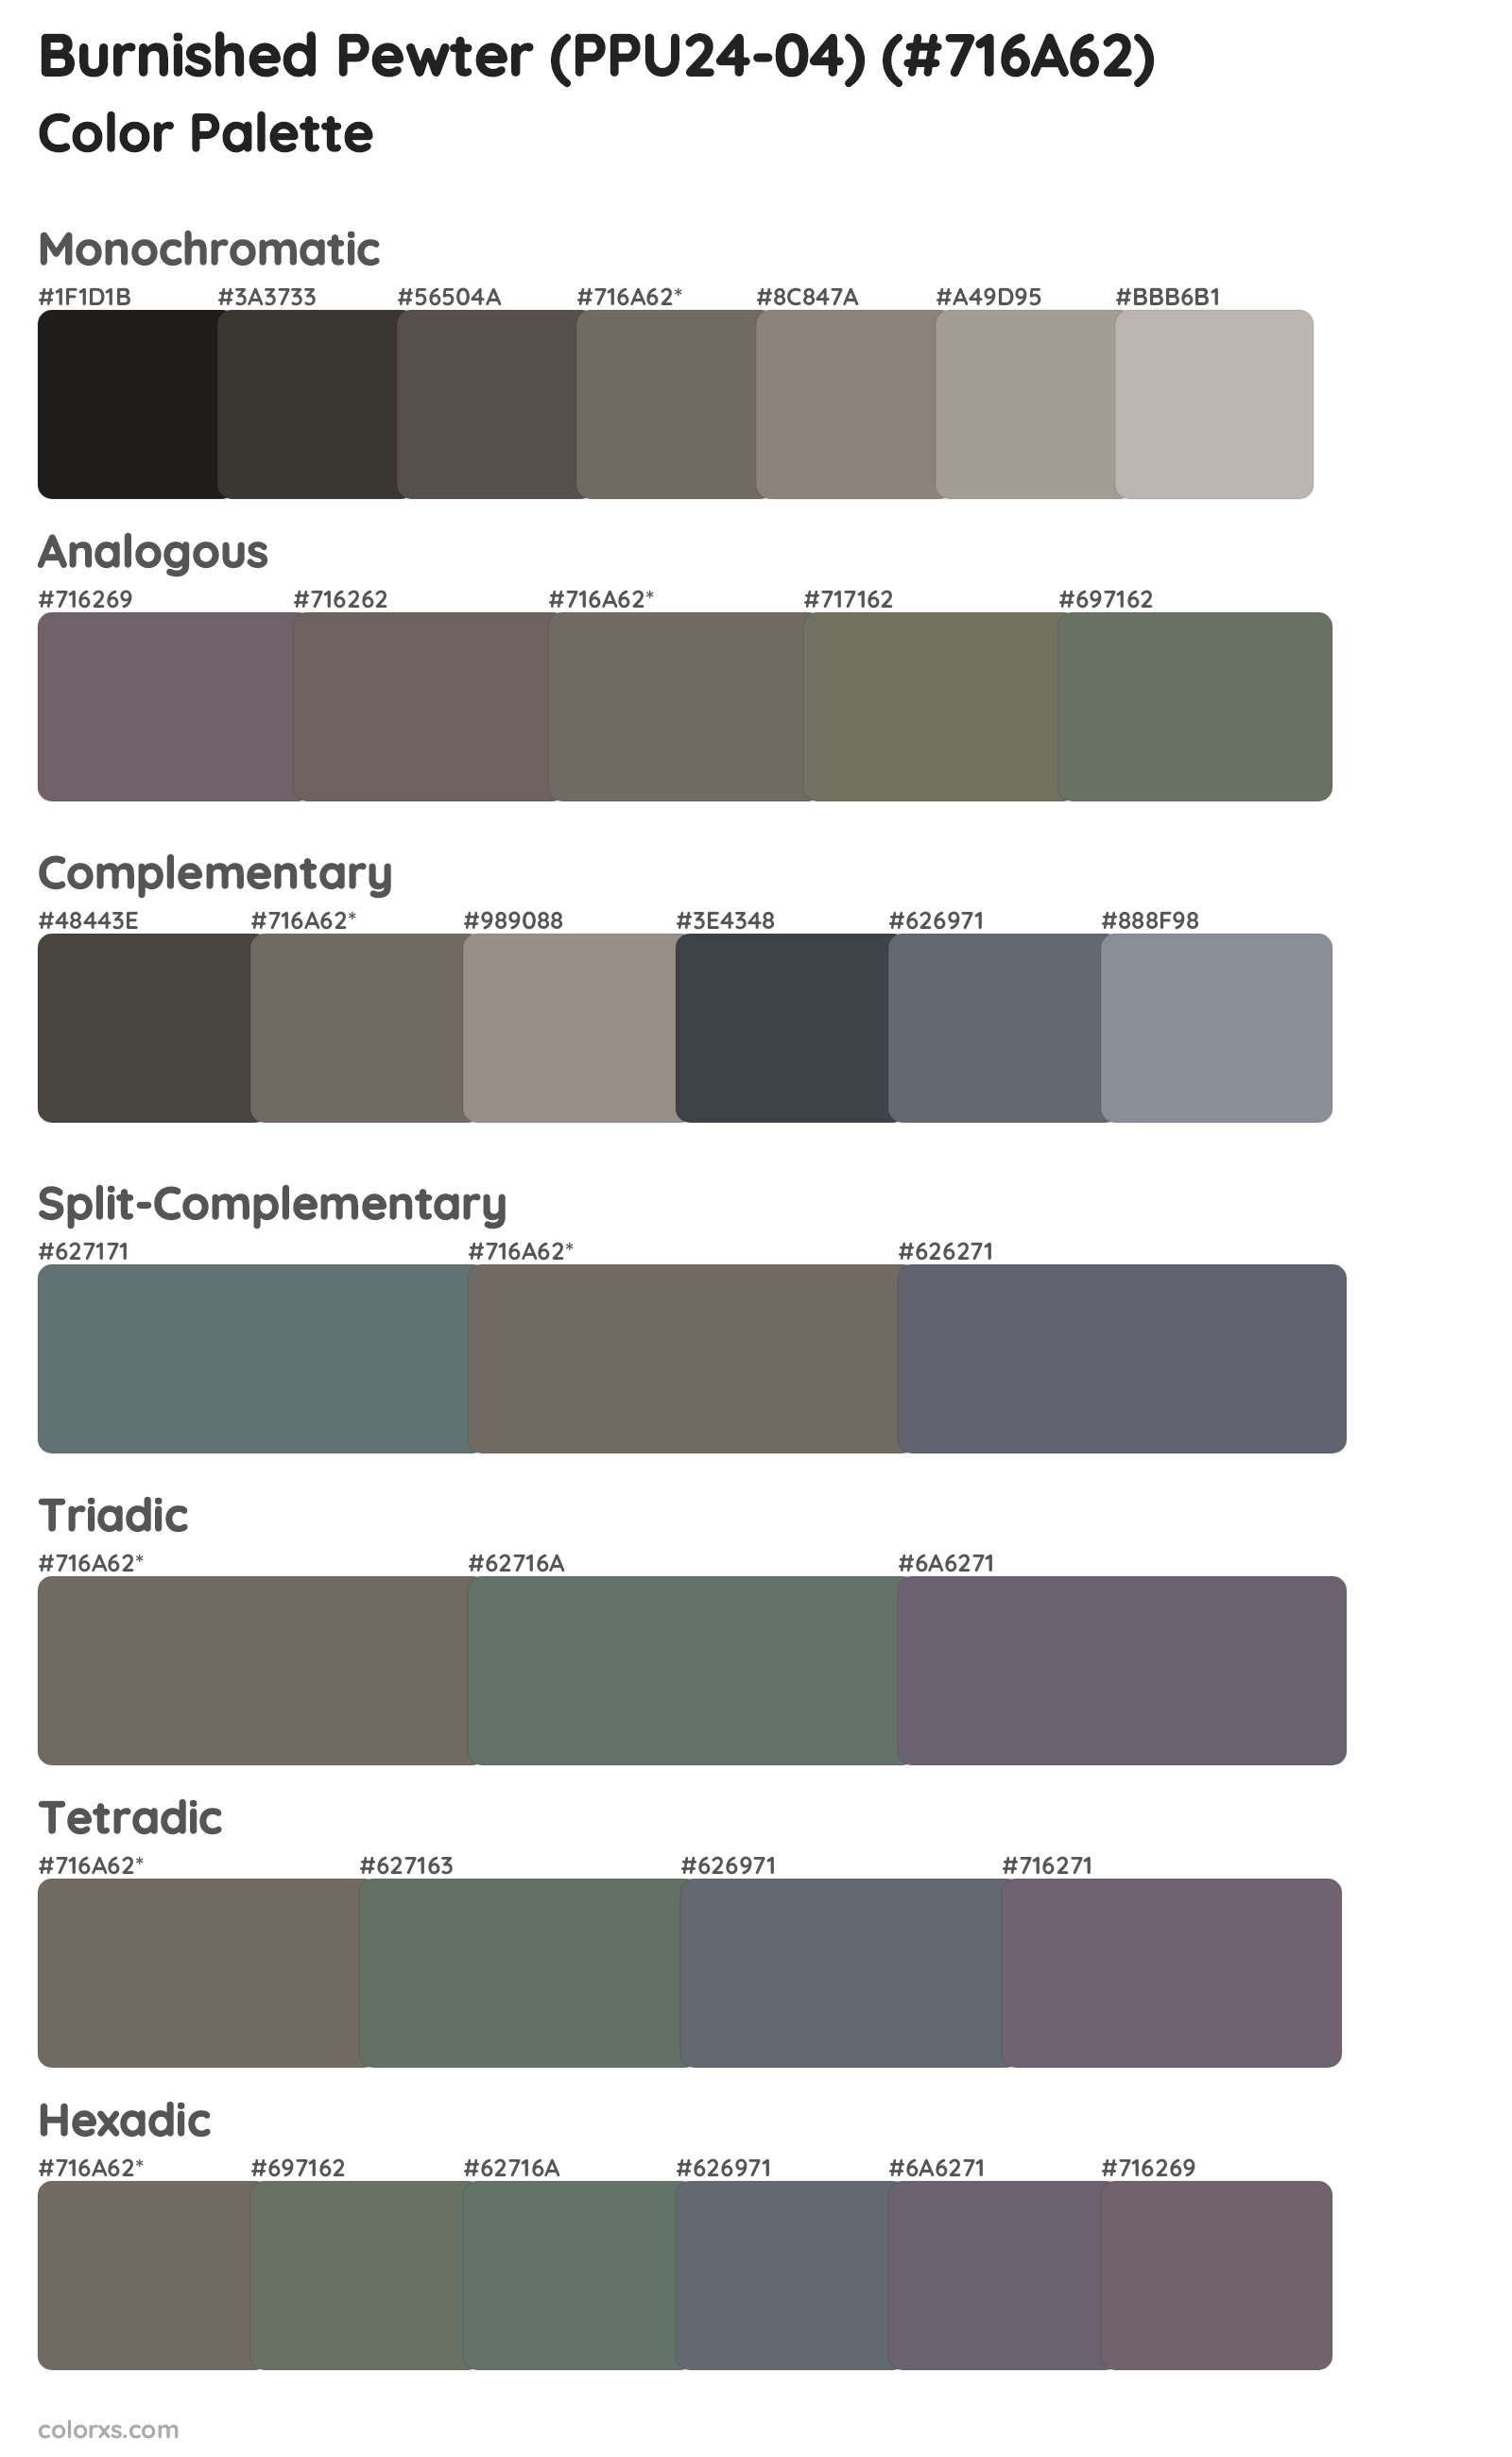 Burnished Pewter (PPU24-04) Color Scheme Palettes